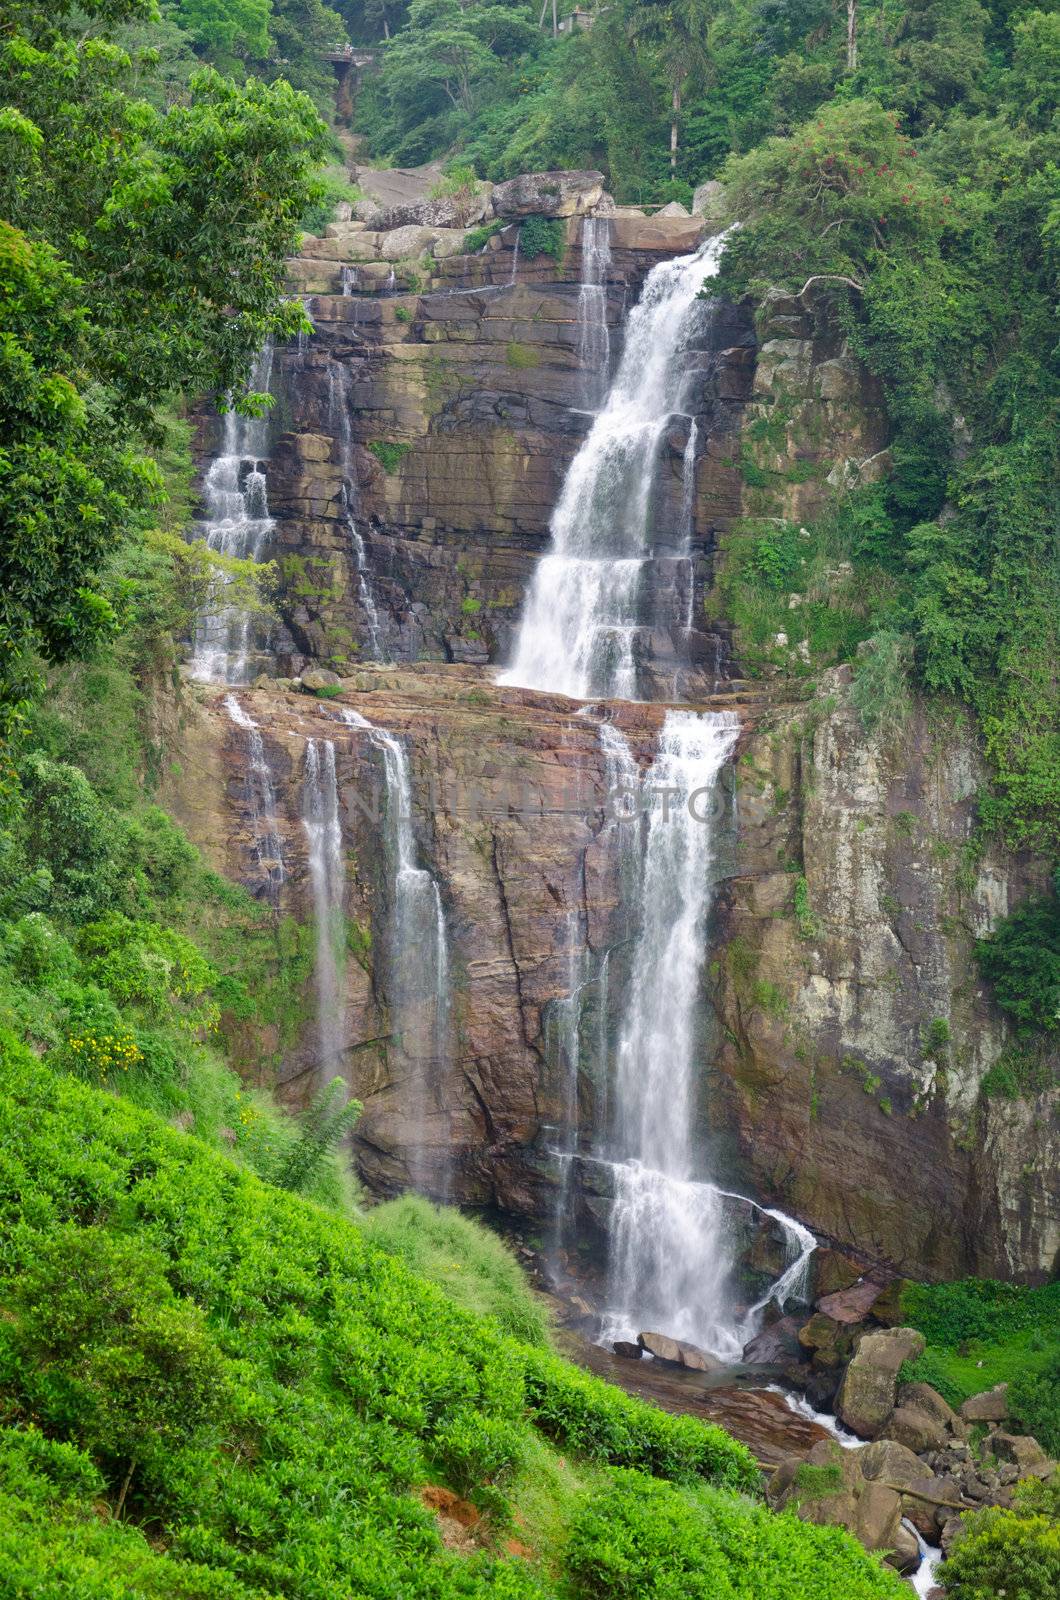 Ramboda magnificent waterfall in the mountains of Sri Lanka